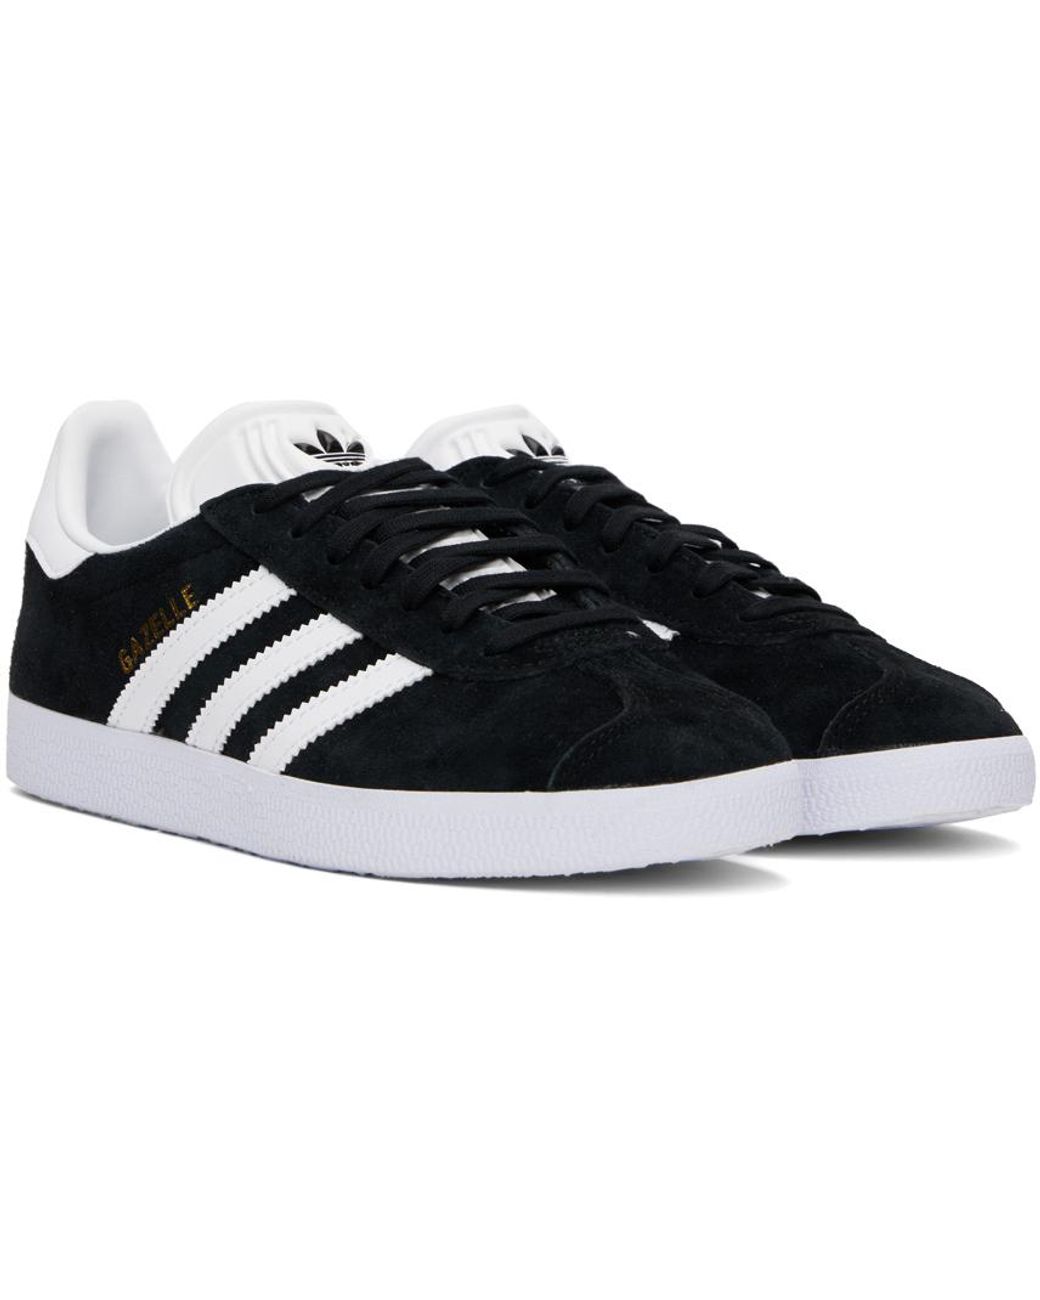 adidas Originals Black & White Gazelle Sneakers | Lyst